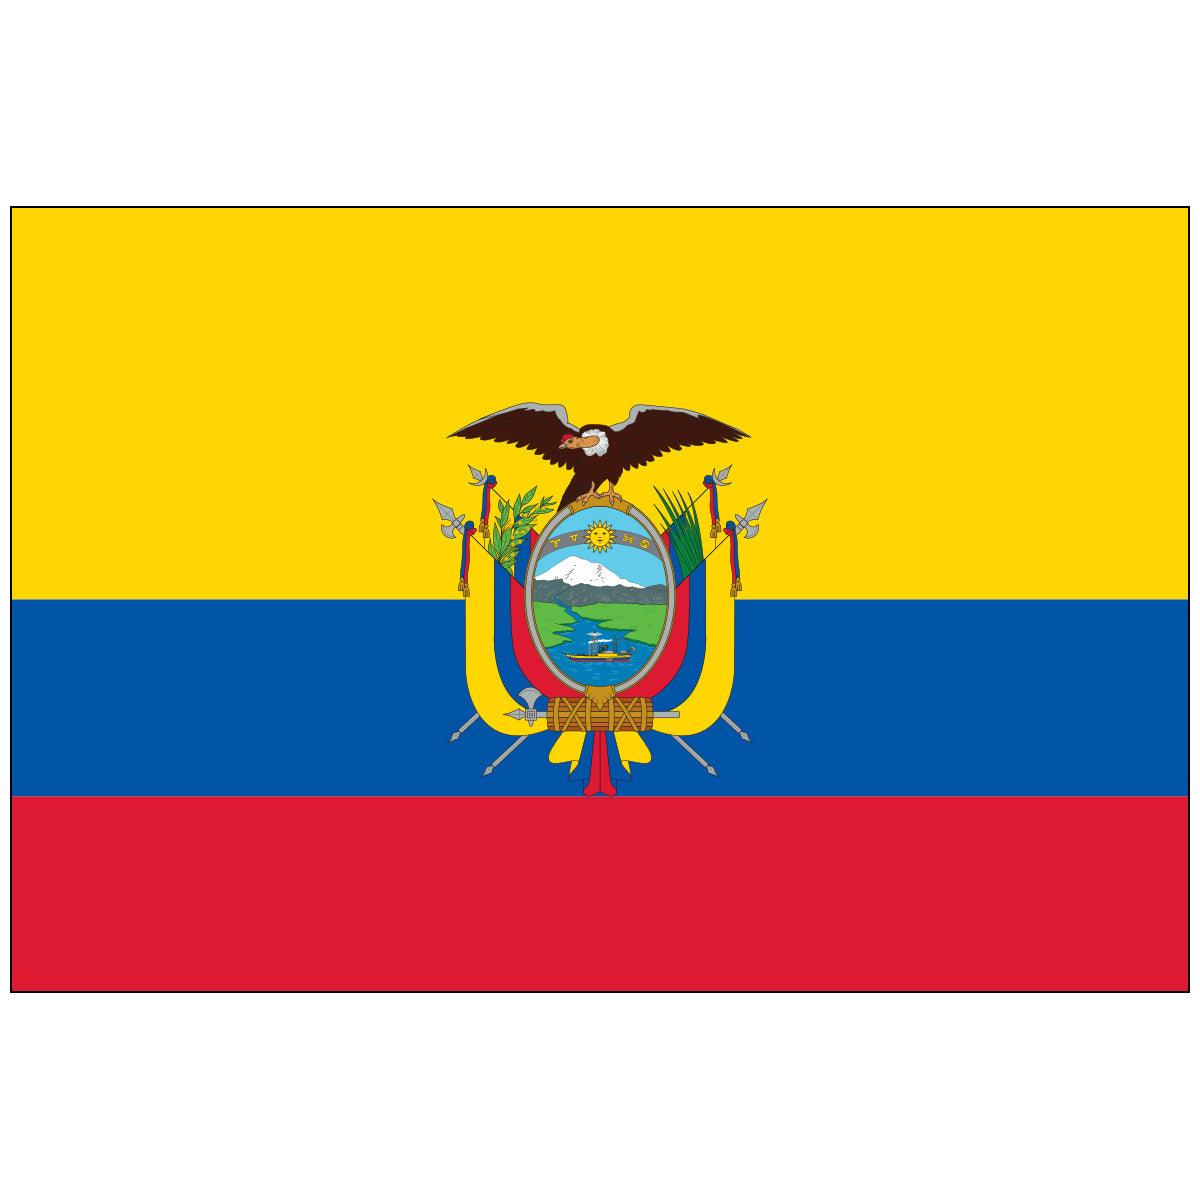 Ecuador - World Flag